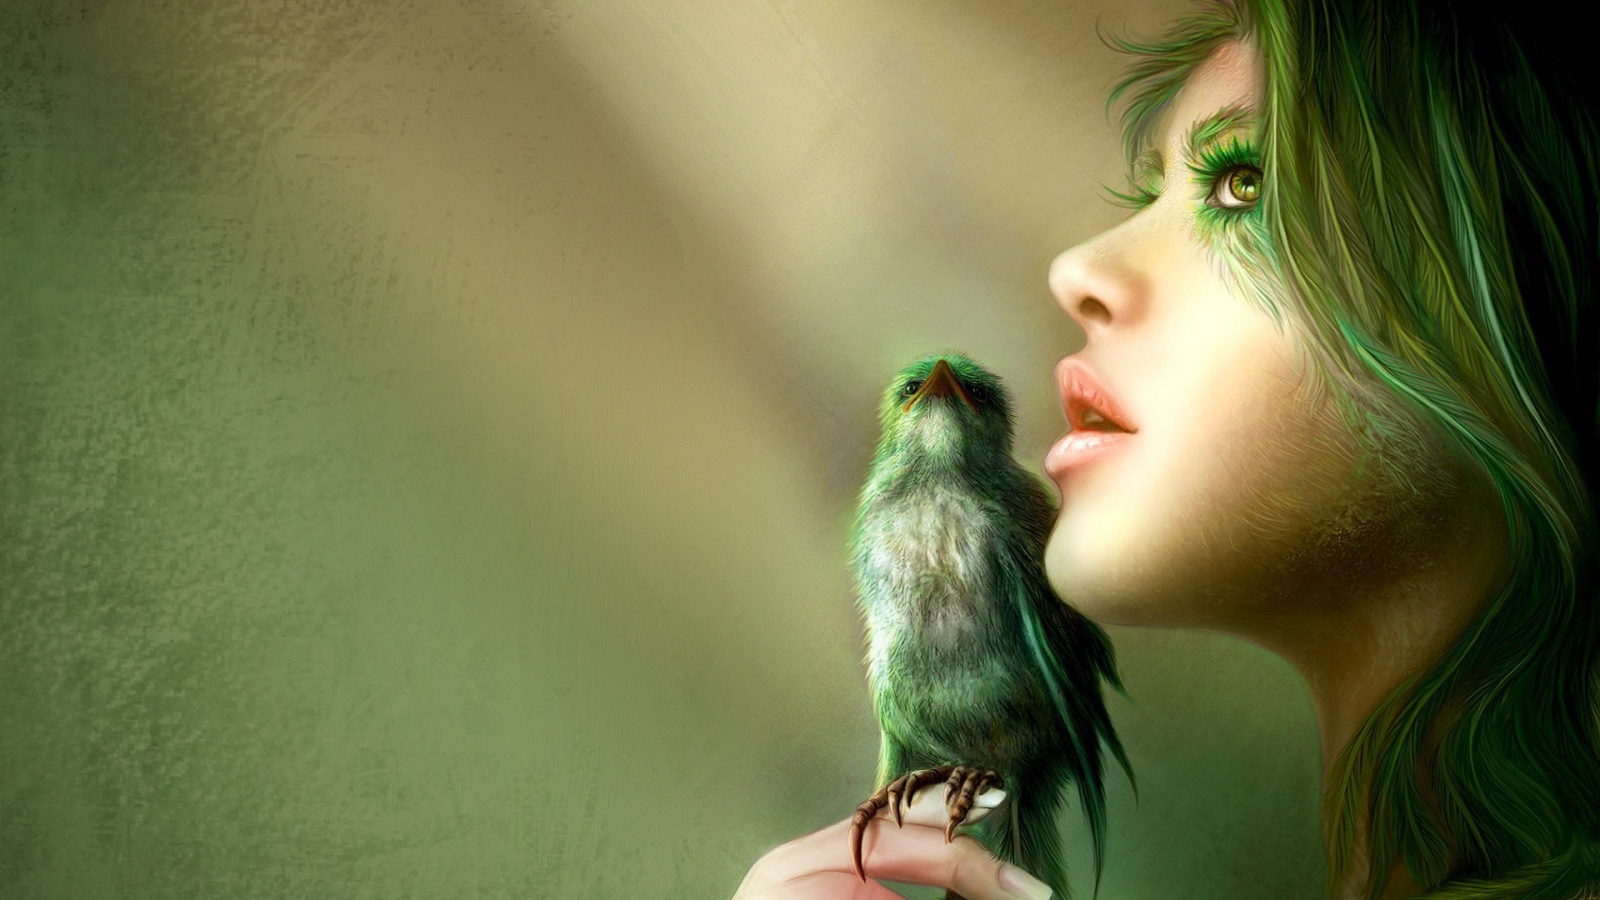 Птица на руке зеленоволосой девушки